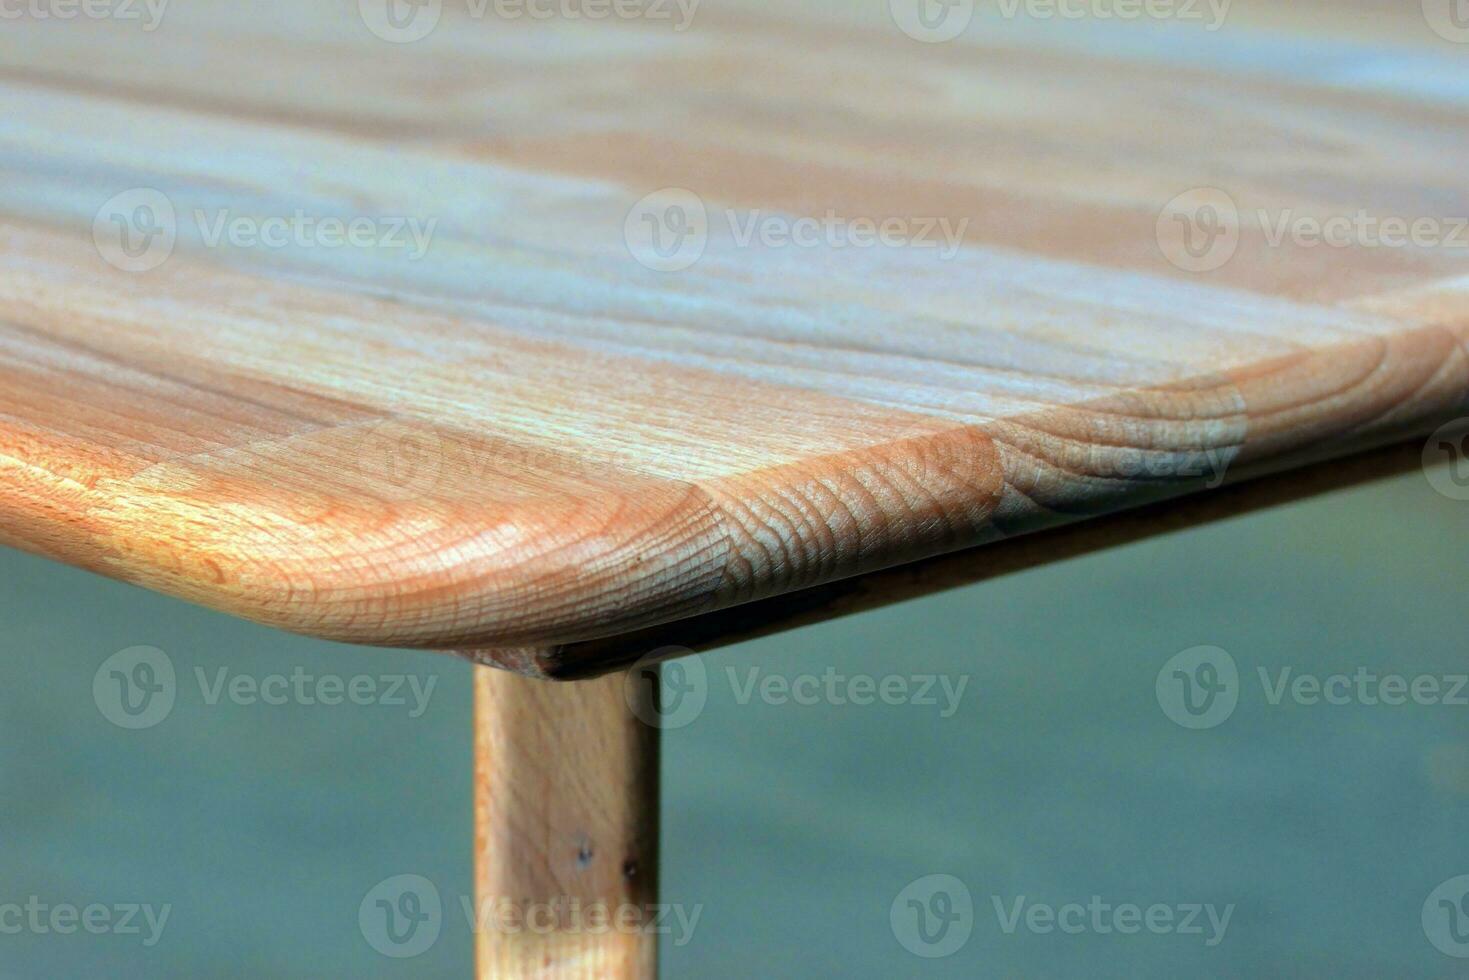 de madera cena mesa superficie. natural madera mueble cerca ver foto